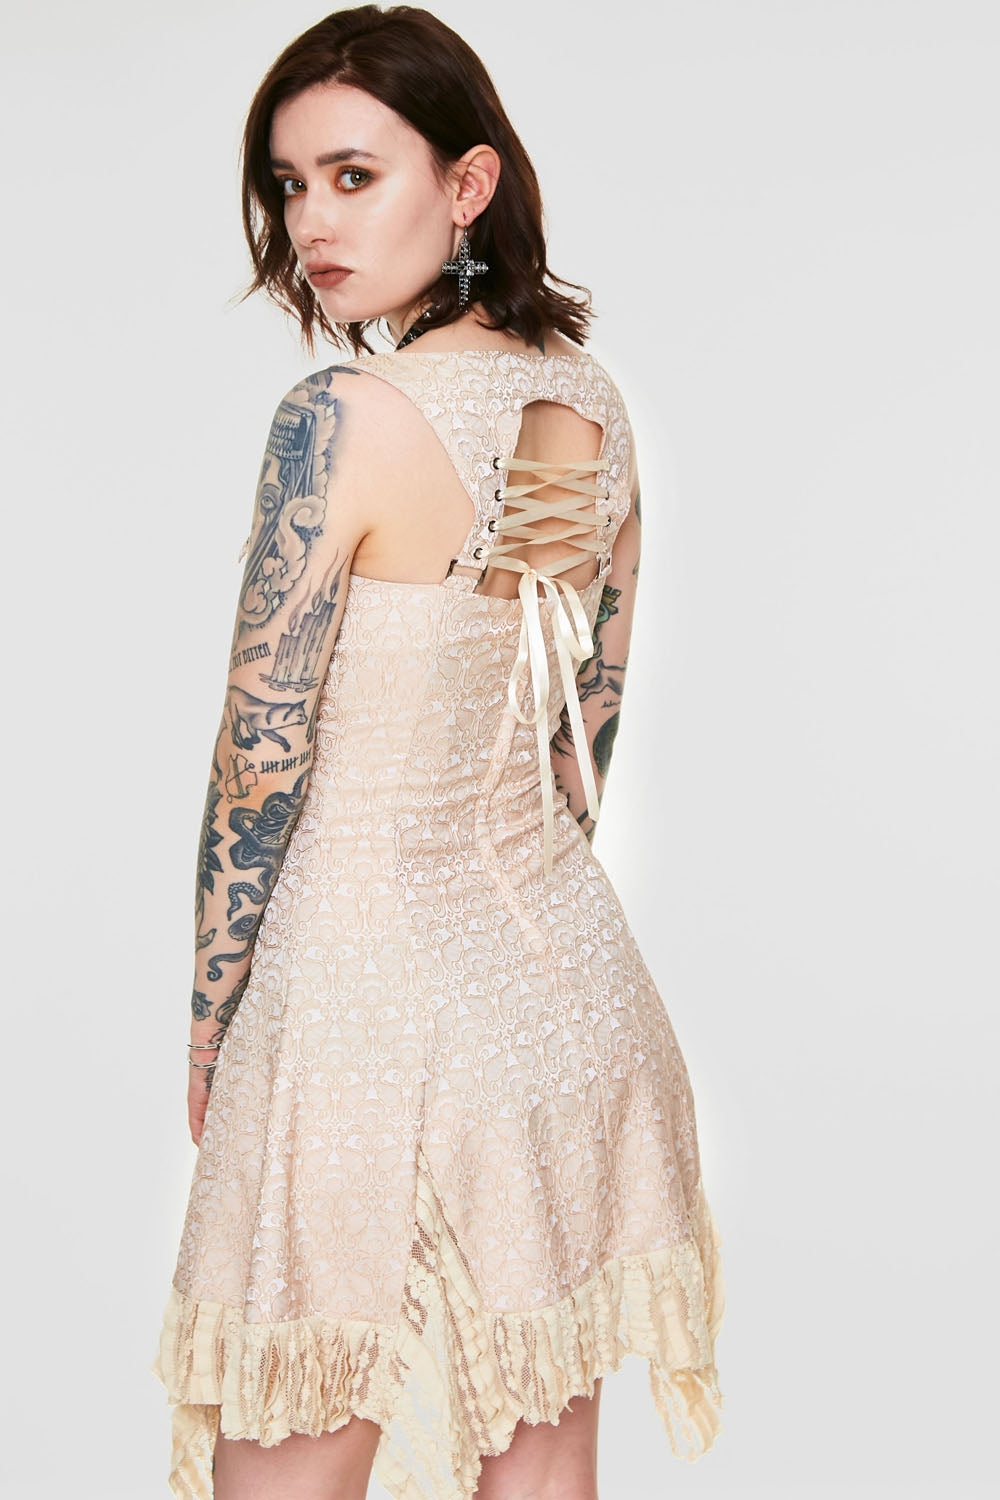 JAWBREAKER Victoriana Beige Lace Dress Cream